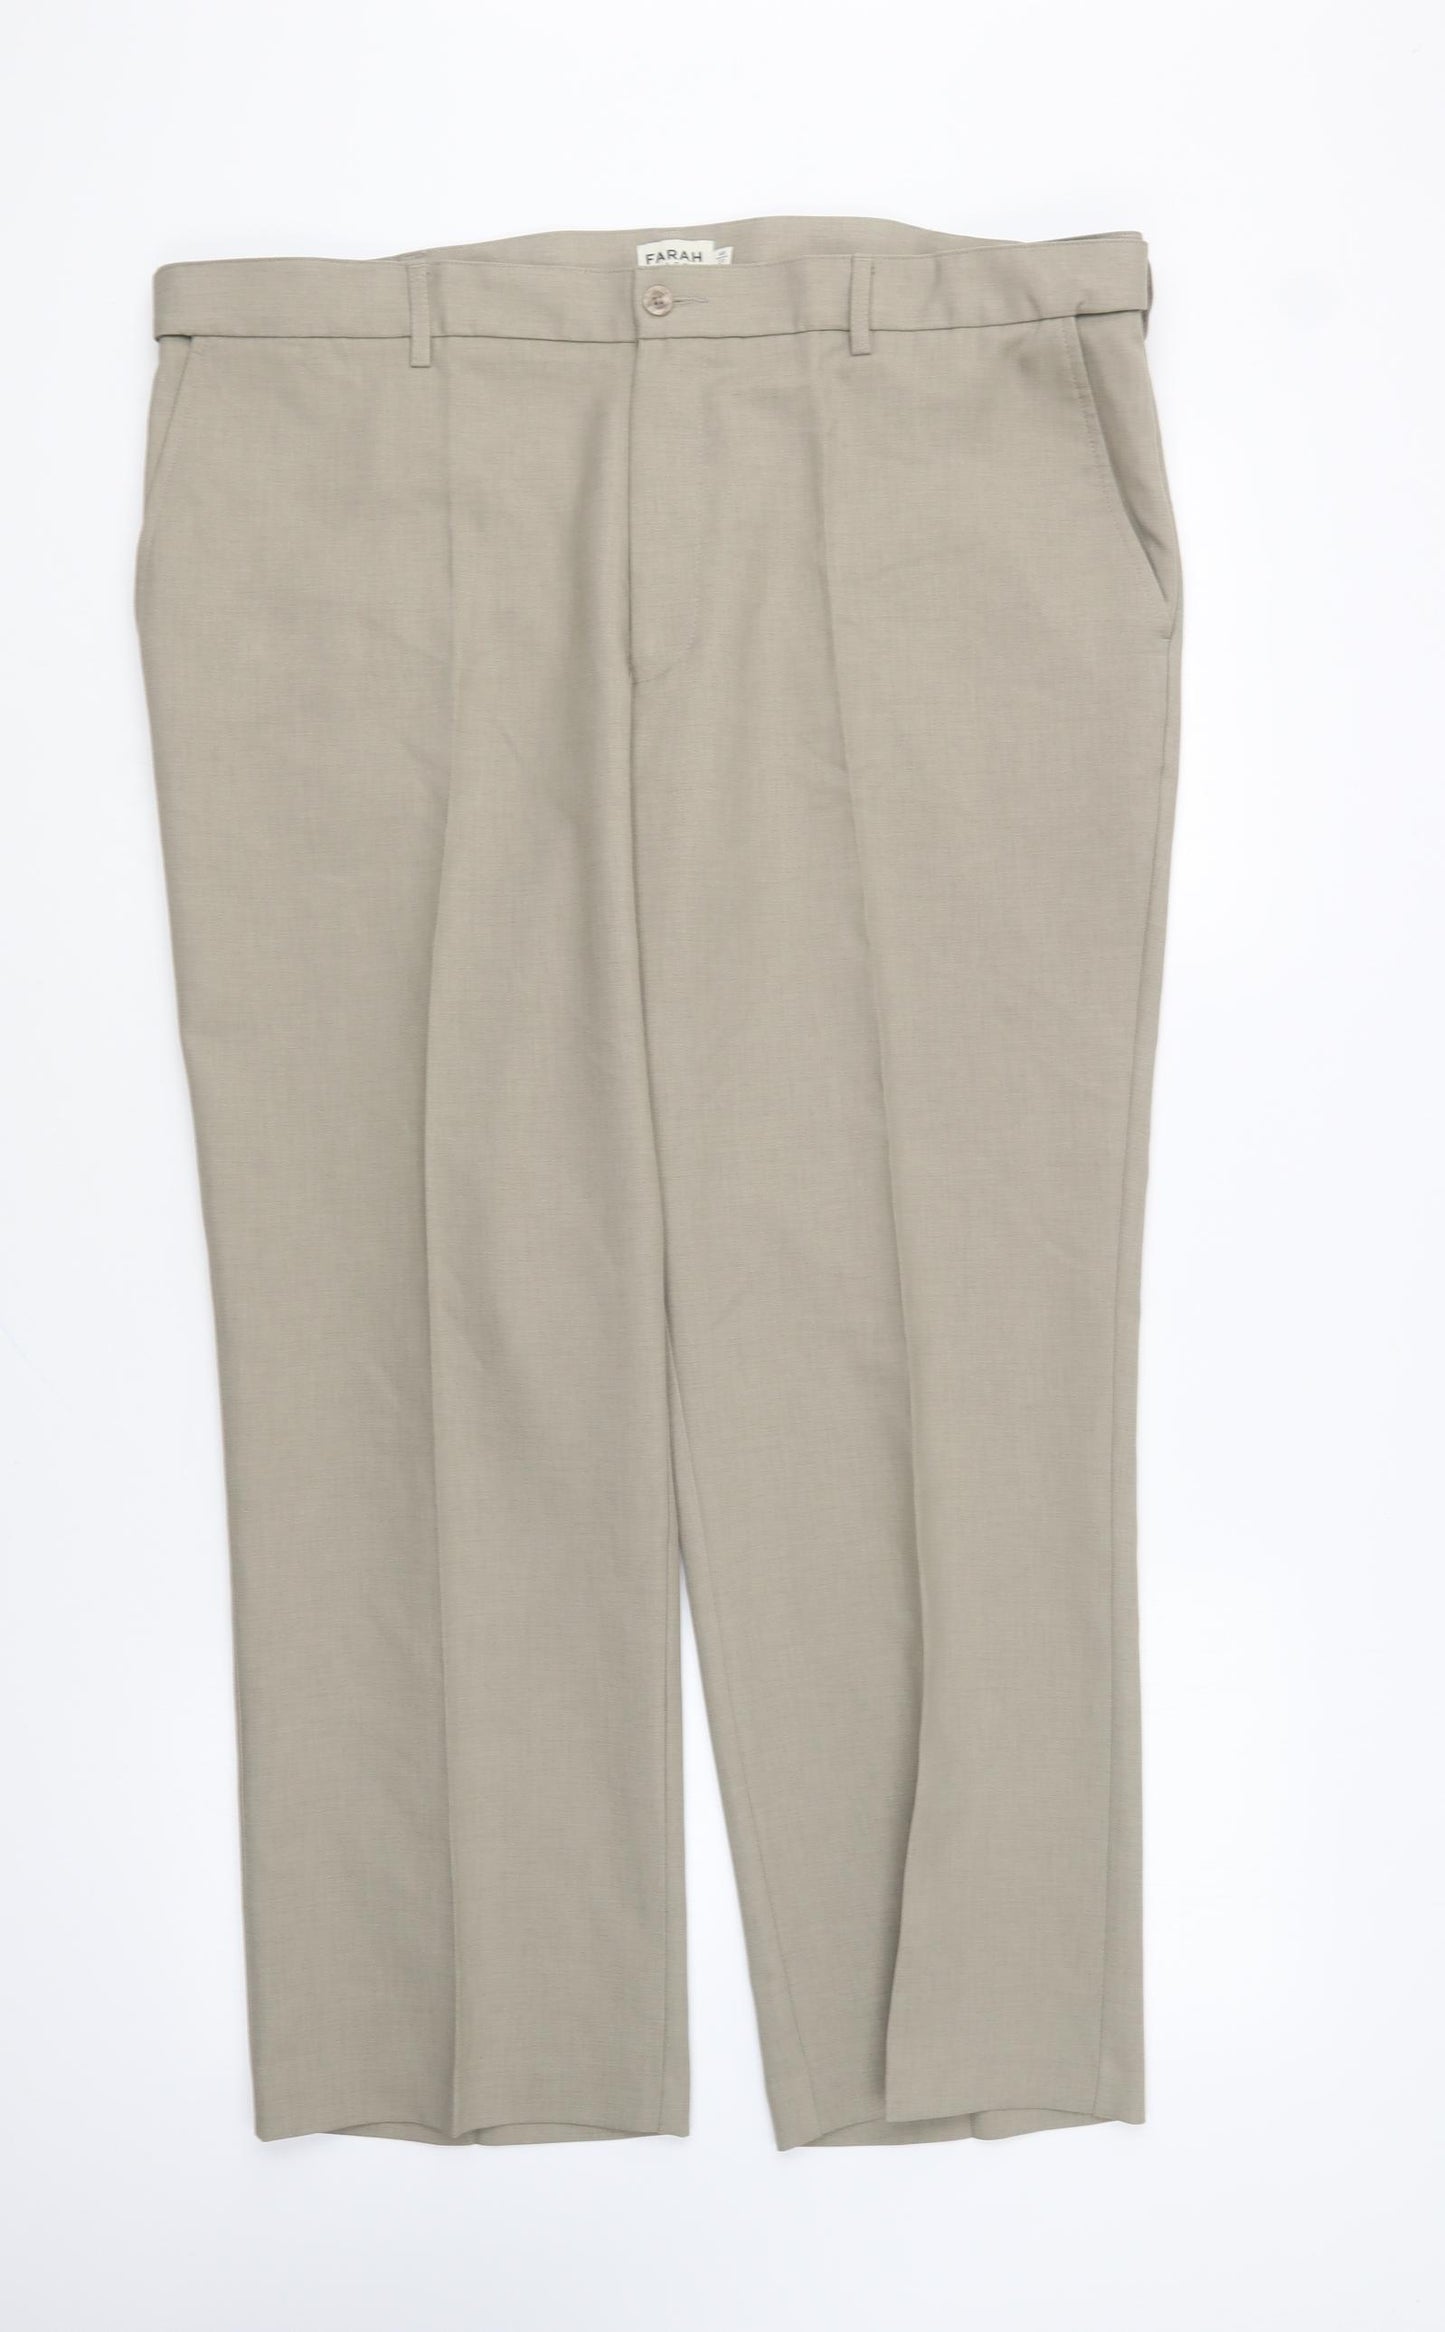 Farah Womens Beige Cotton Trousers Size 40 in L27 in Regular Button